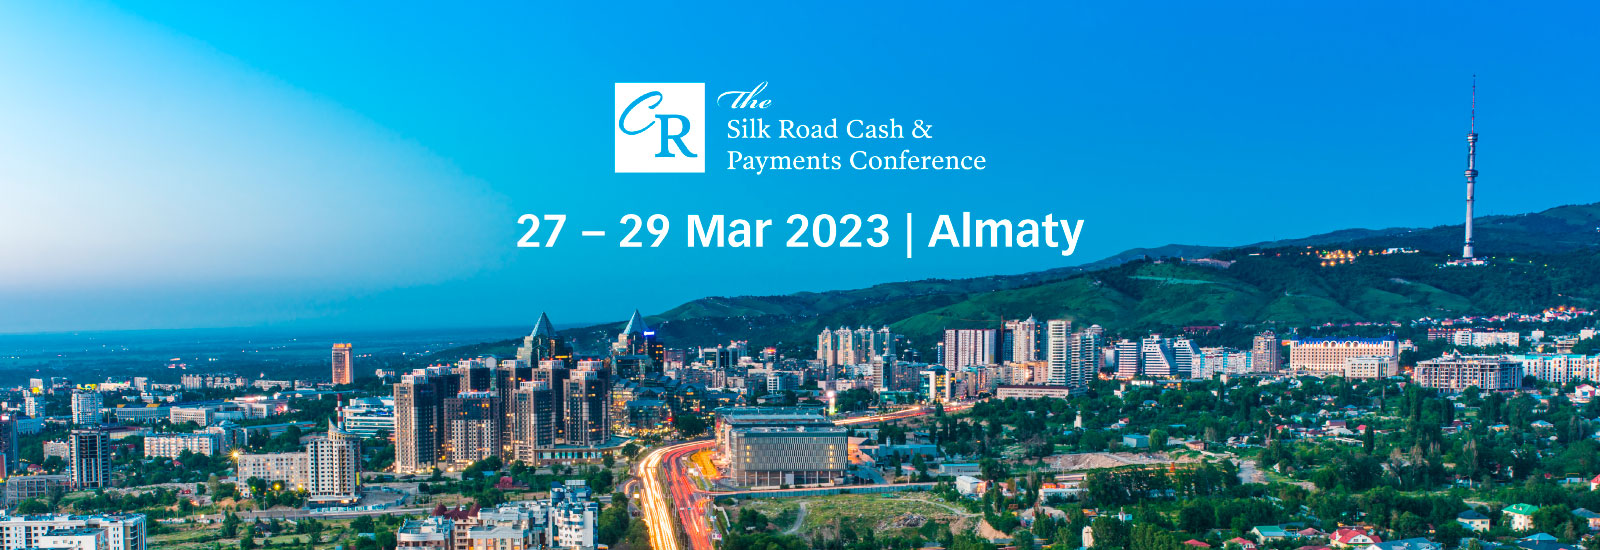 ProgressSoft at The Silk Road Conference 2023